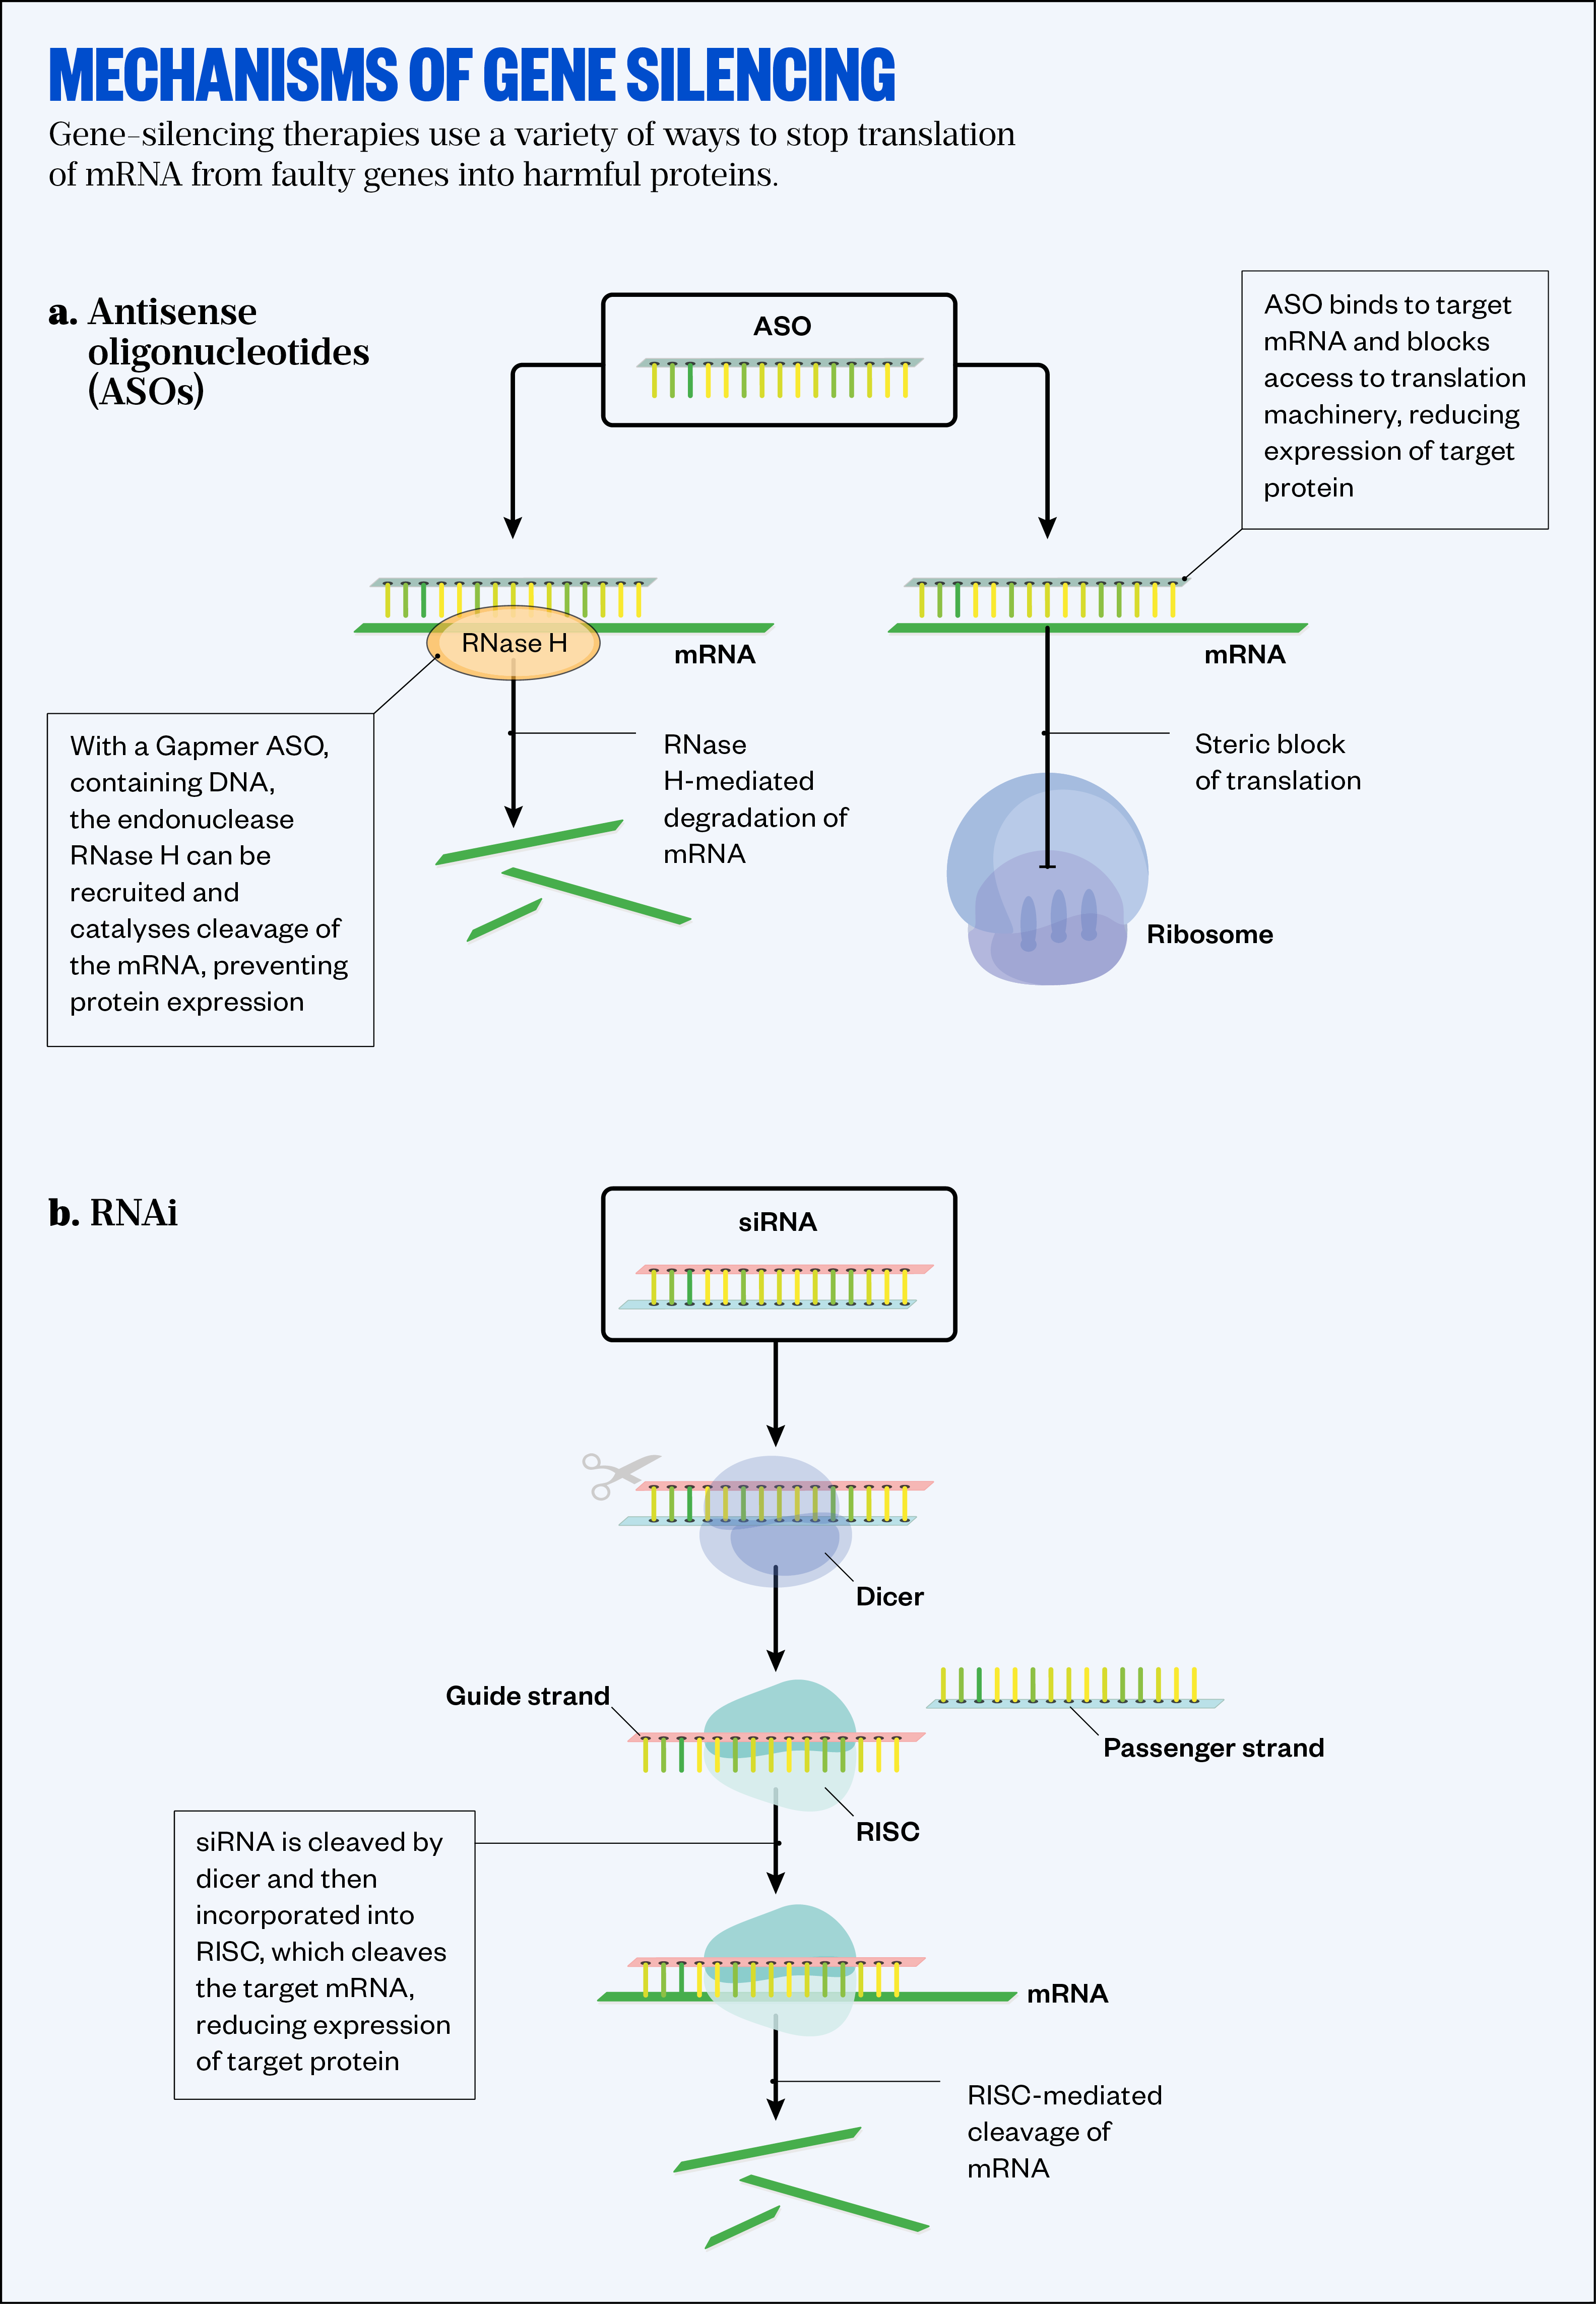 Figure: Mechanisms of gene silencing